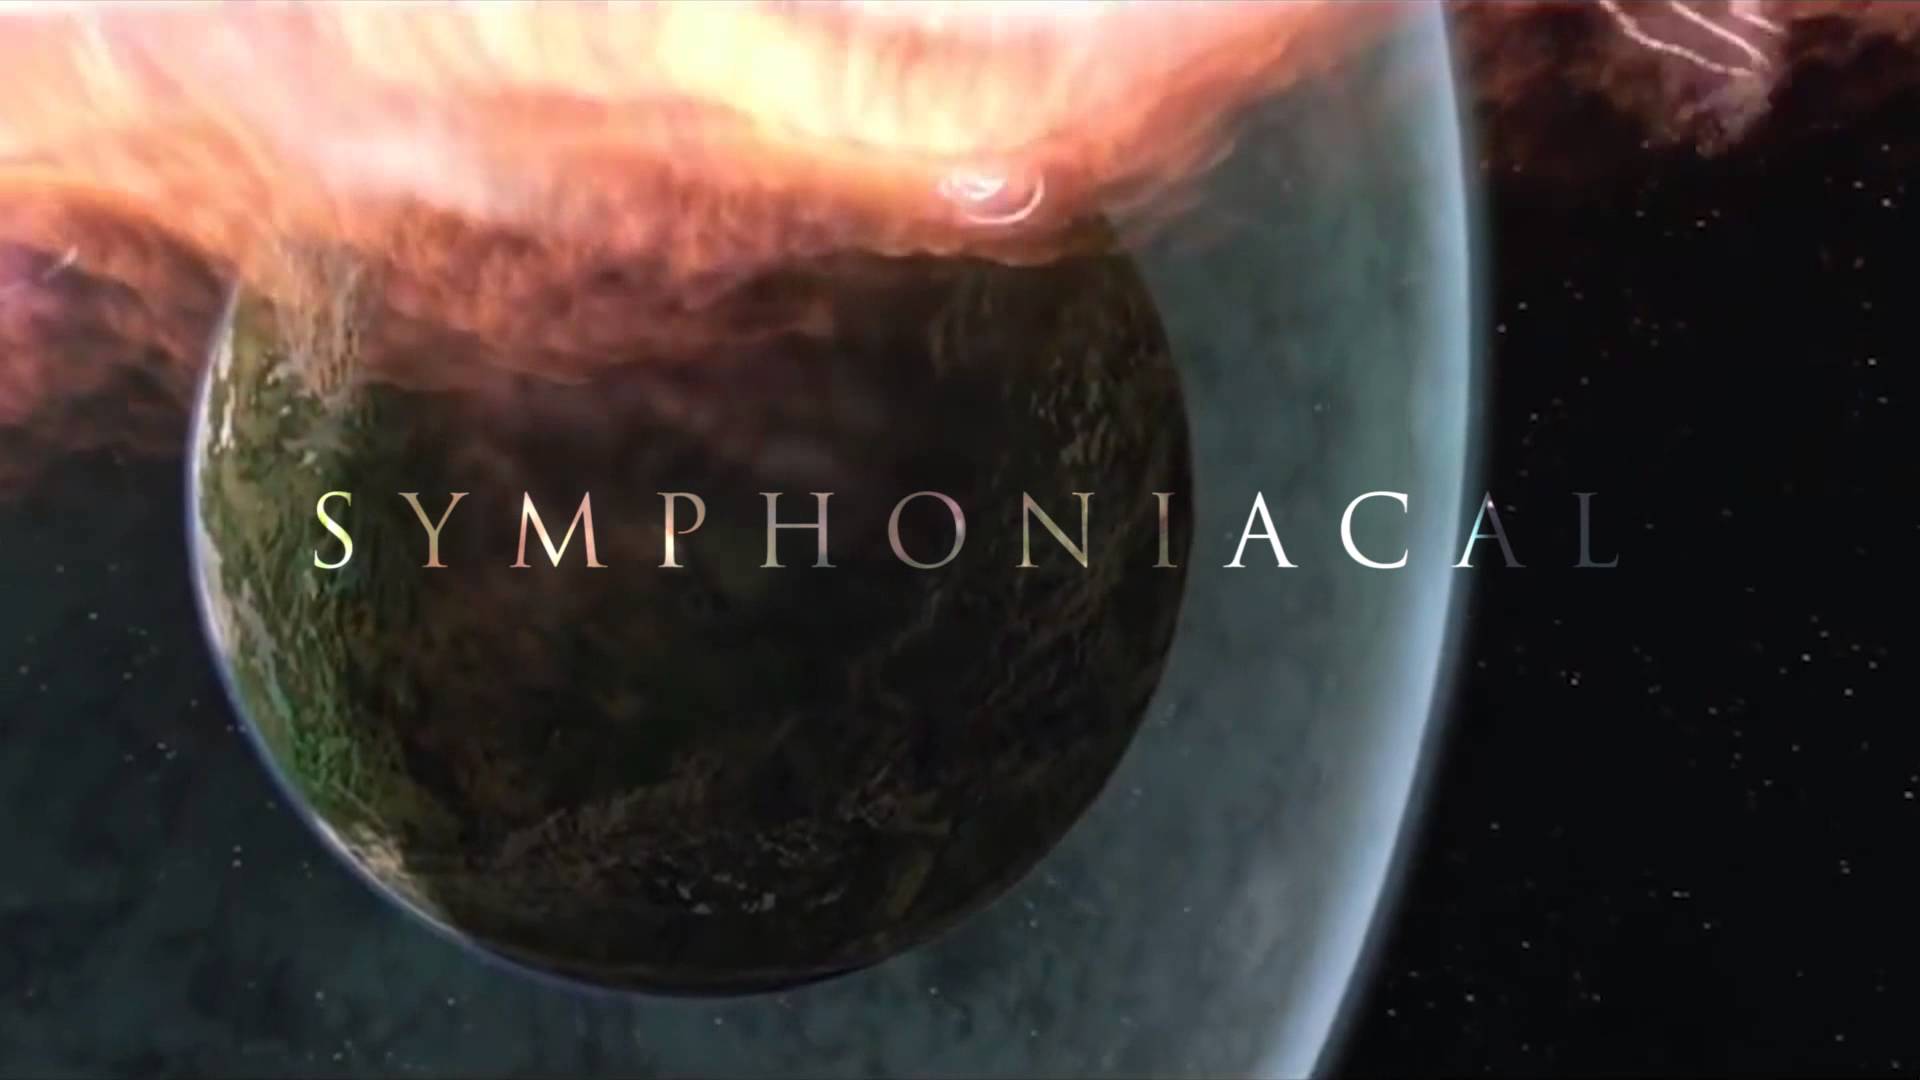 Symphoniacal finally gets a teaser.